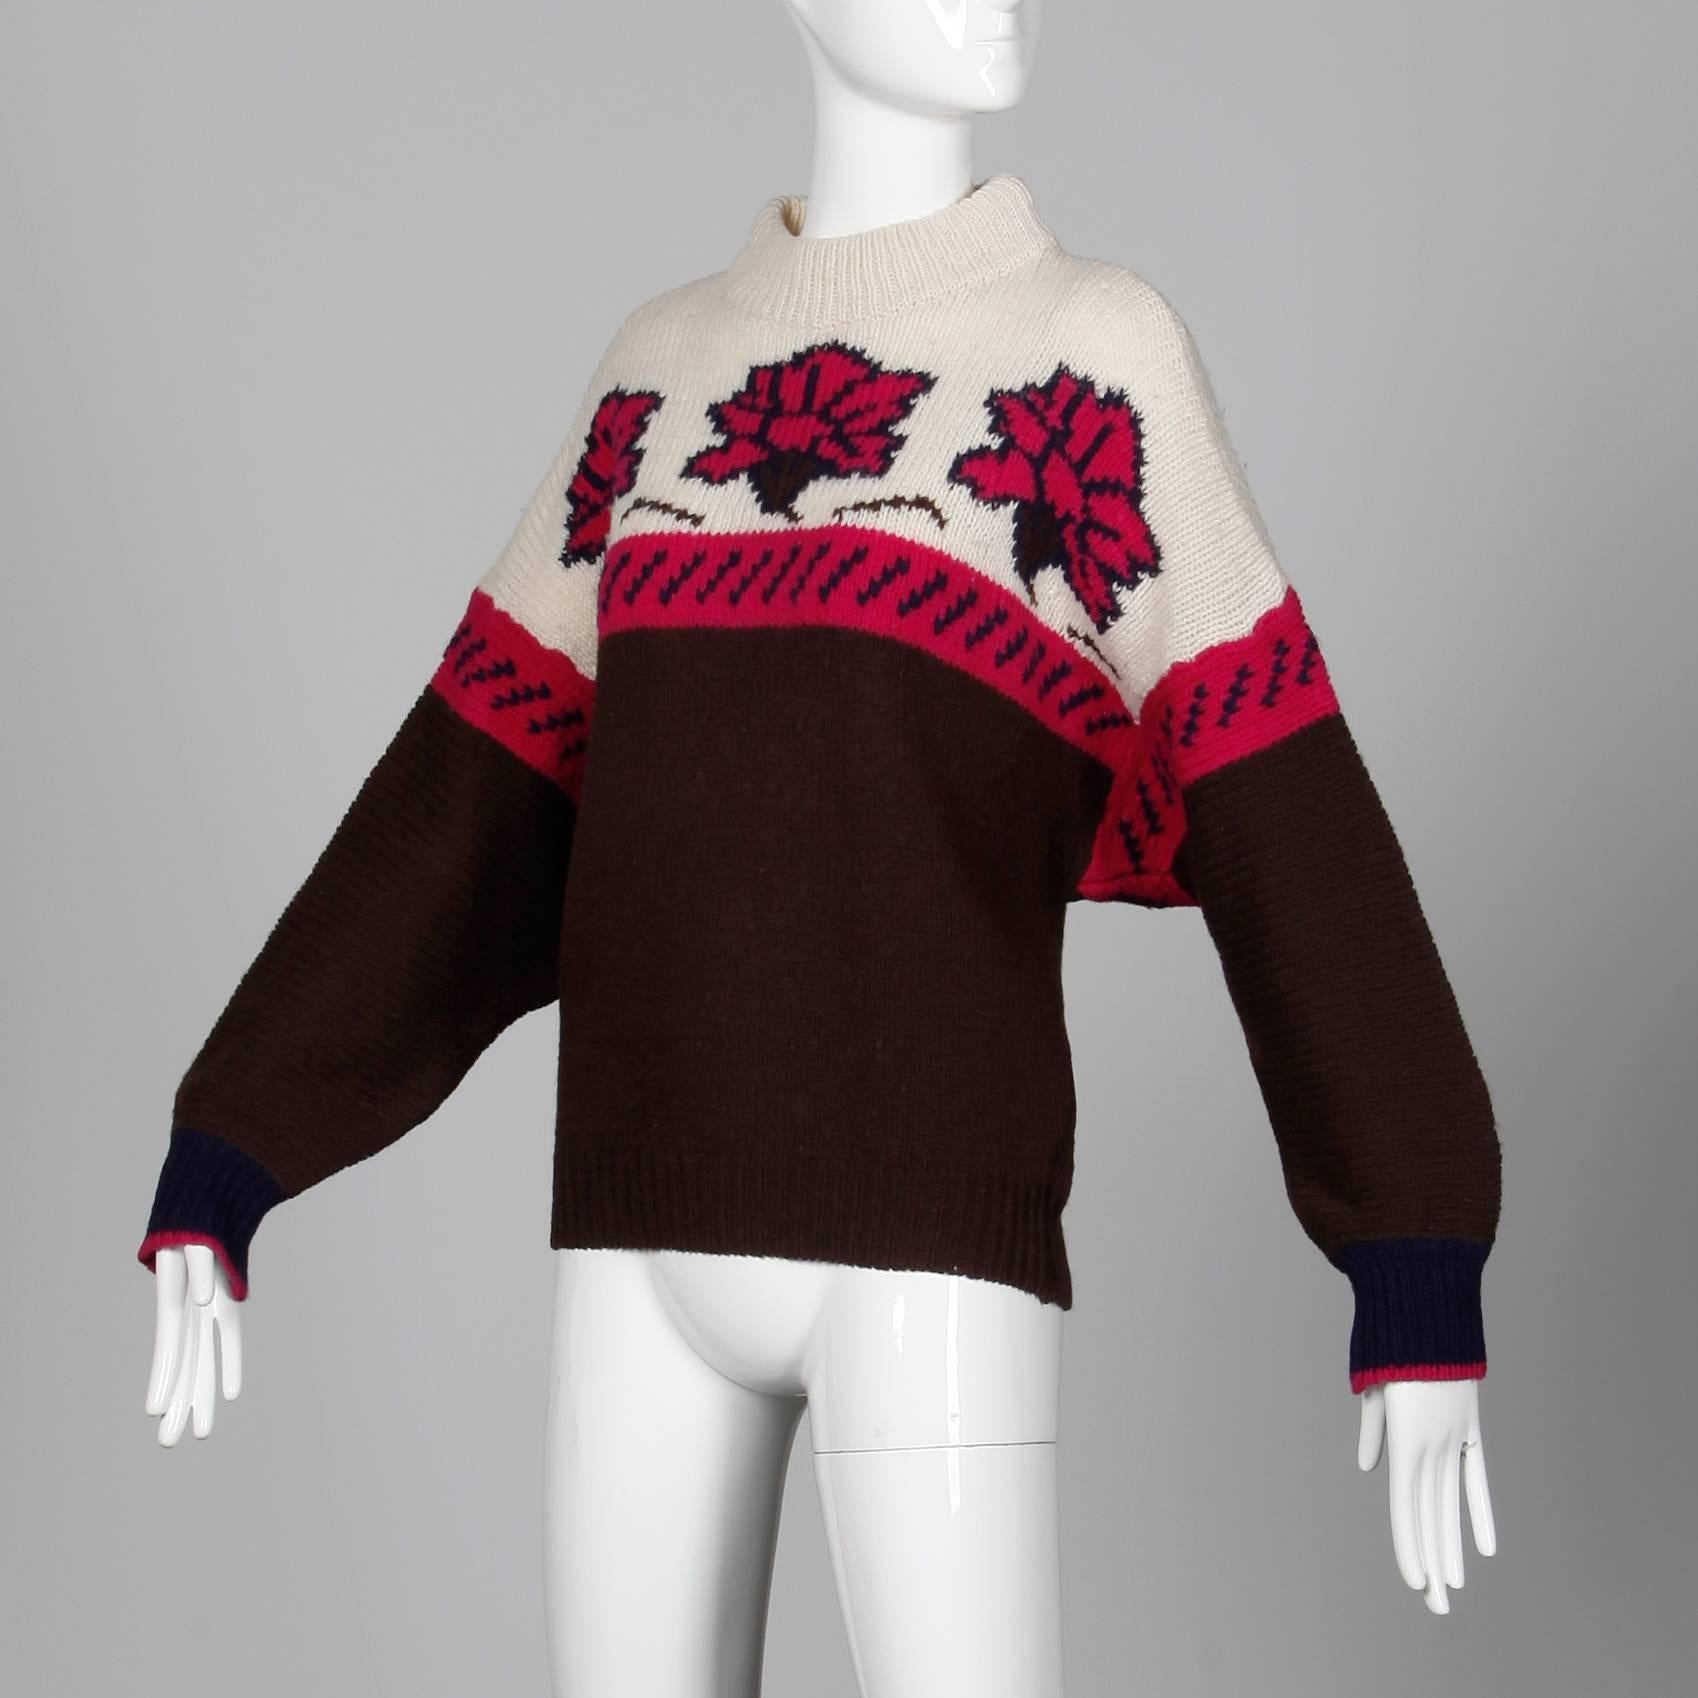 1990s sweater